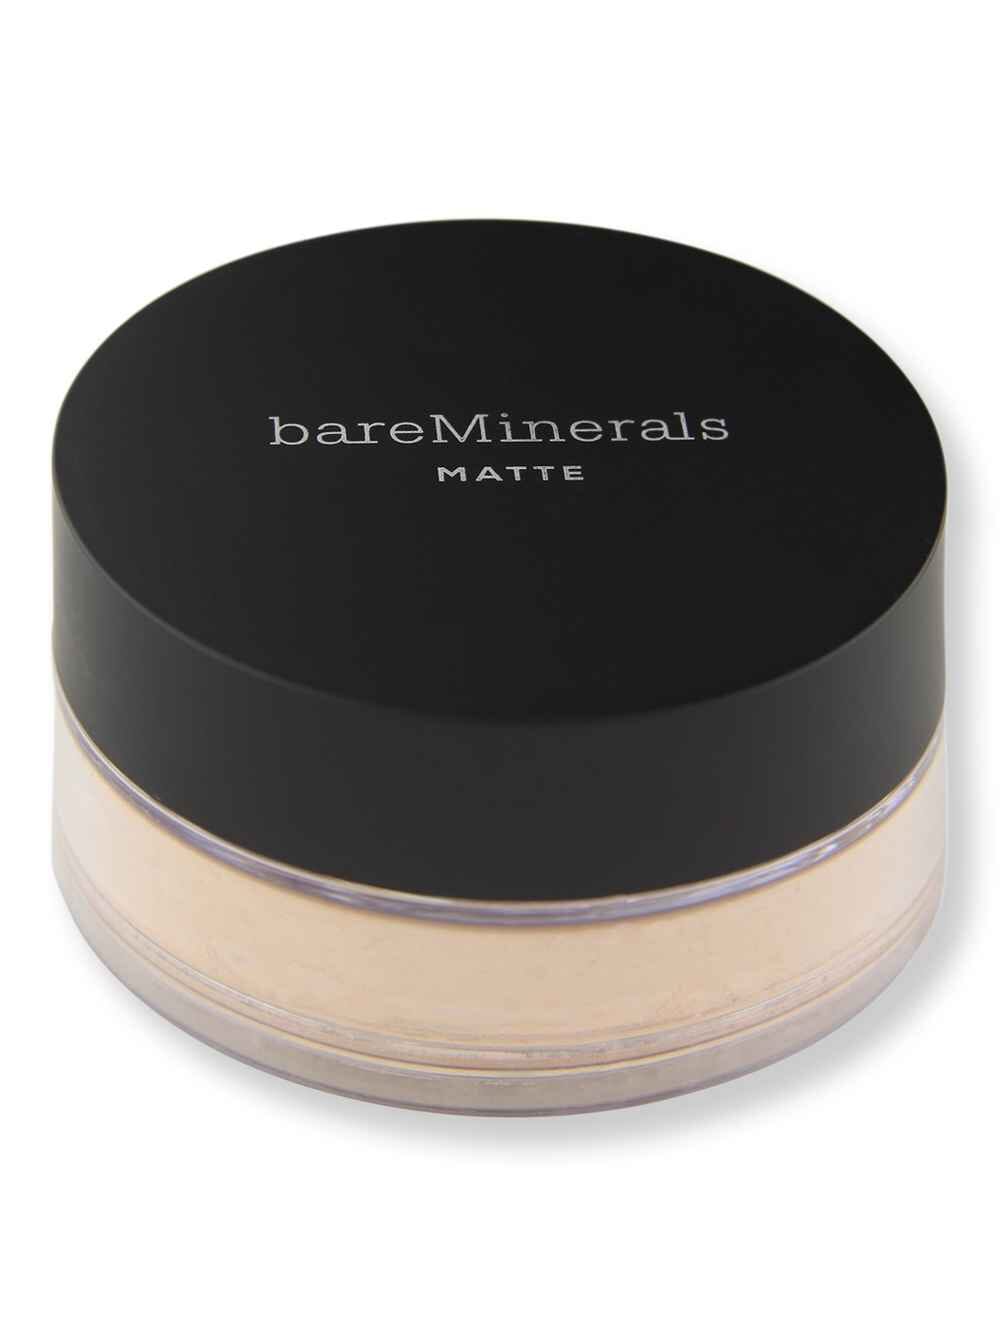 Bareminerals Bareminerals Loose Powder Matte Foundation SPF 15 Golden Ivory 07 0.21 oz6 g Tinted Moisturizers & Foundations 